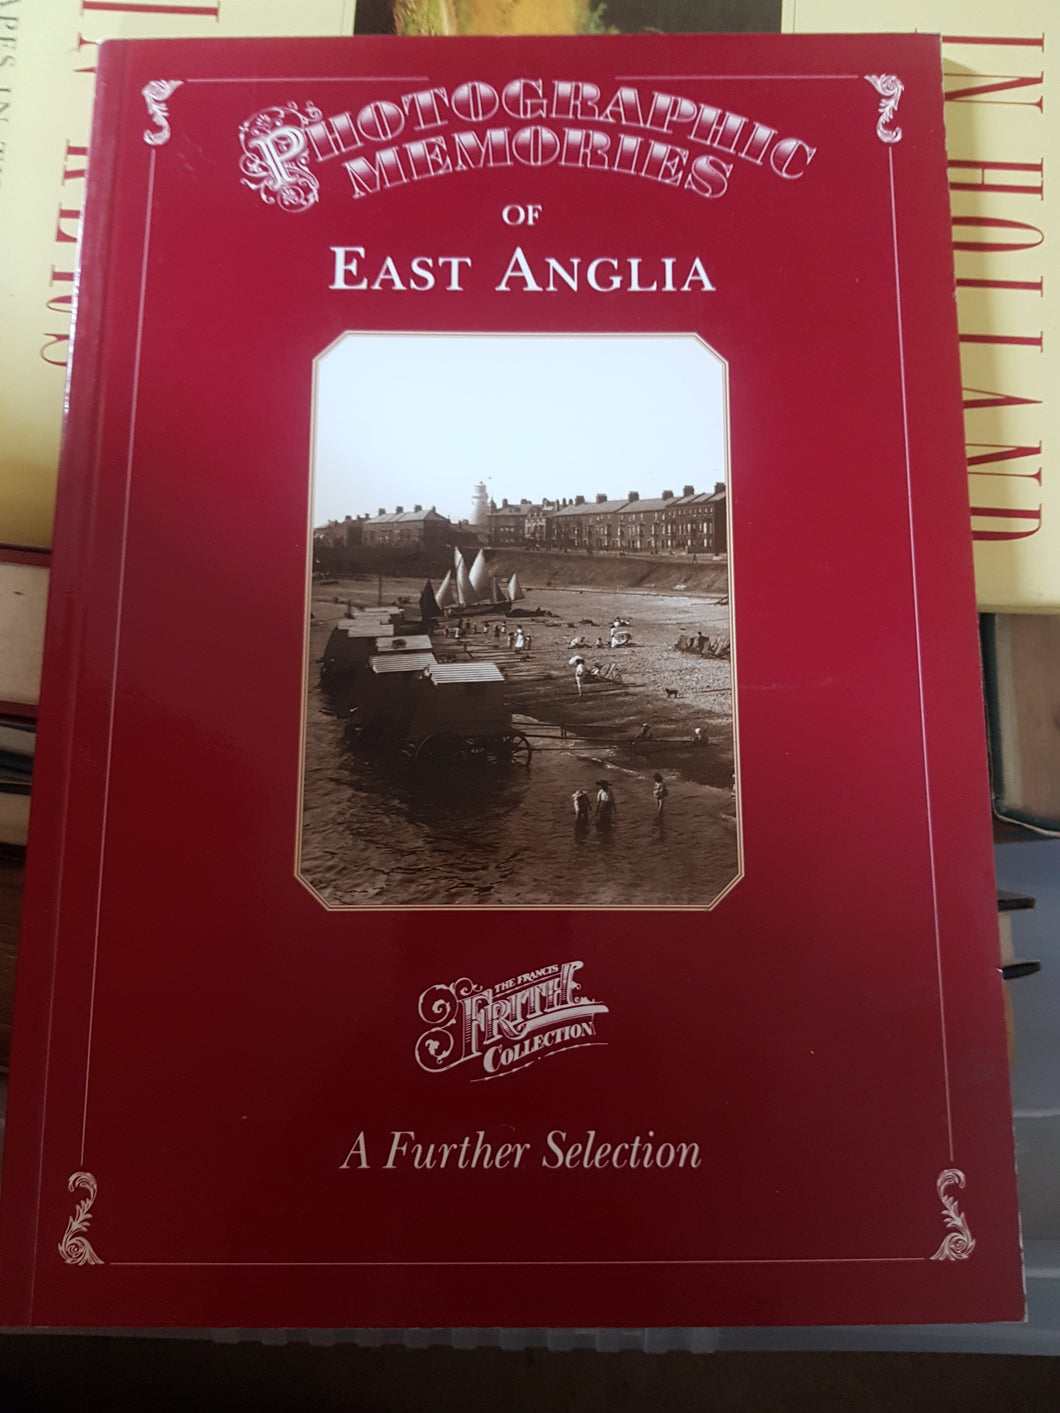 Photographic Memories of East Anglia. Flexi cover.